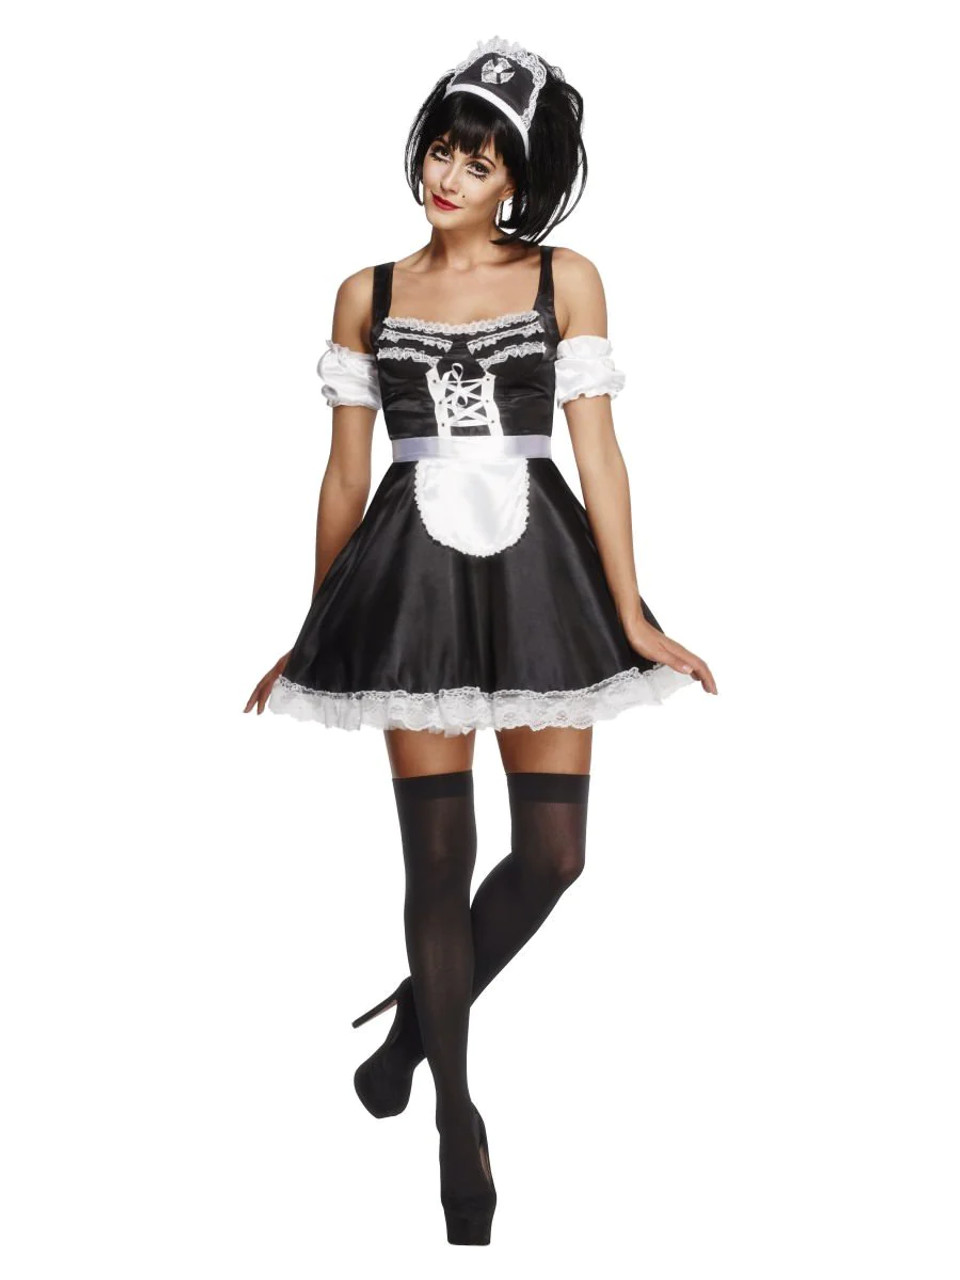 Halloween Nurse Costume for Women - Flirty Nurse Lingerie Dress